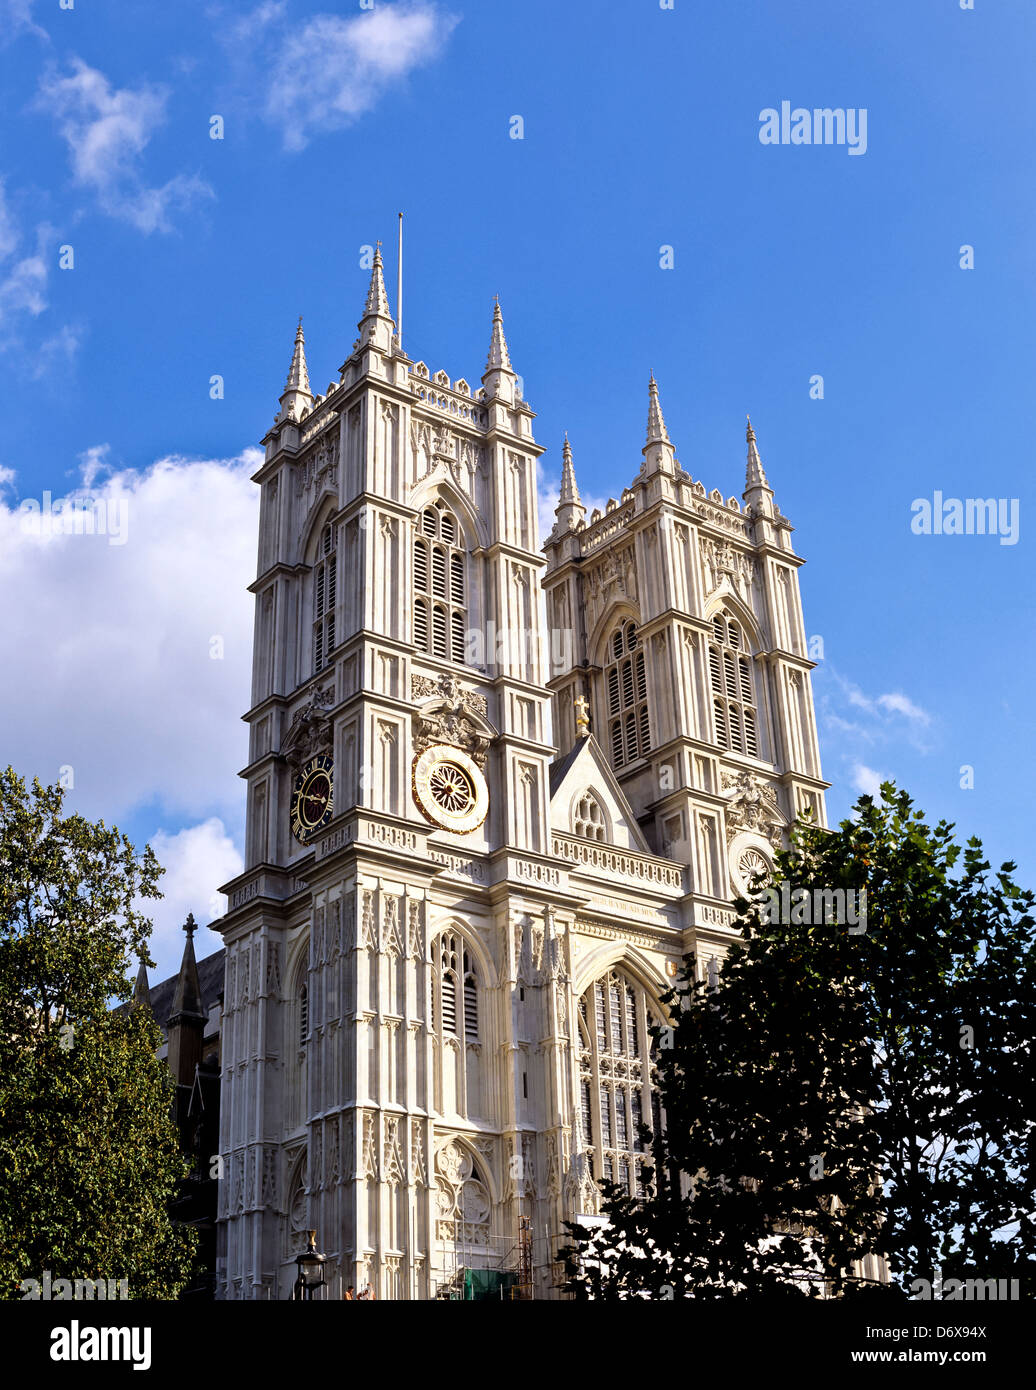 8629. La Abadía de Westminster, London, UK Foto de stock